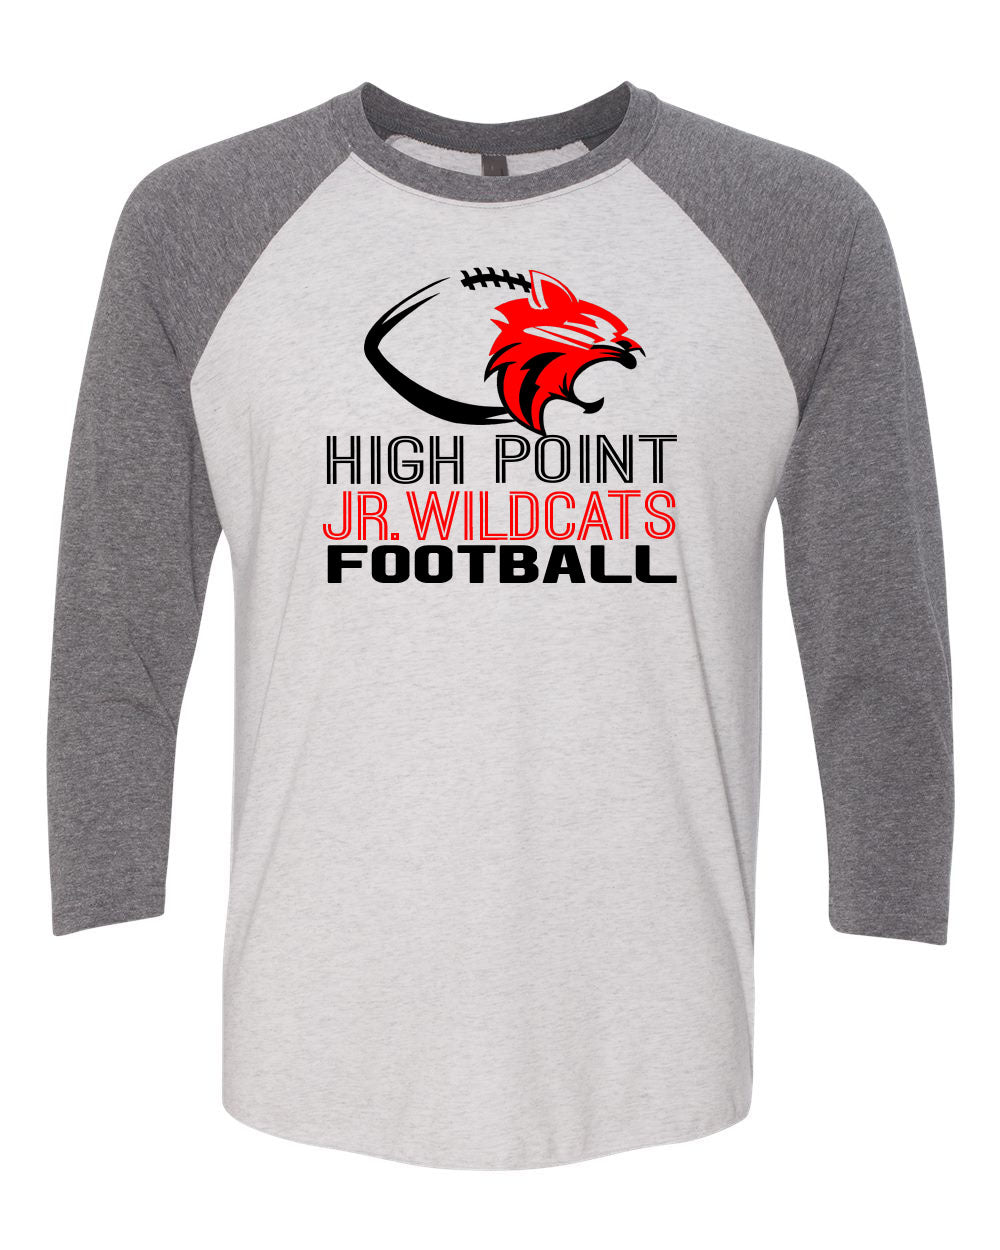 High Point Football design 1 raglan shirt